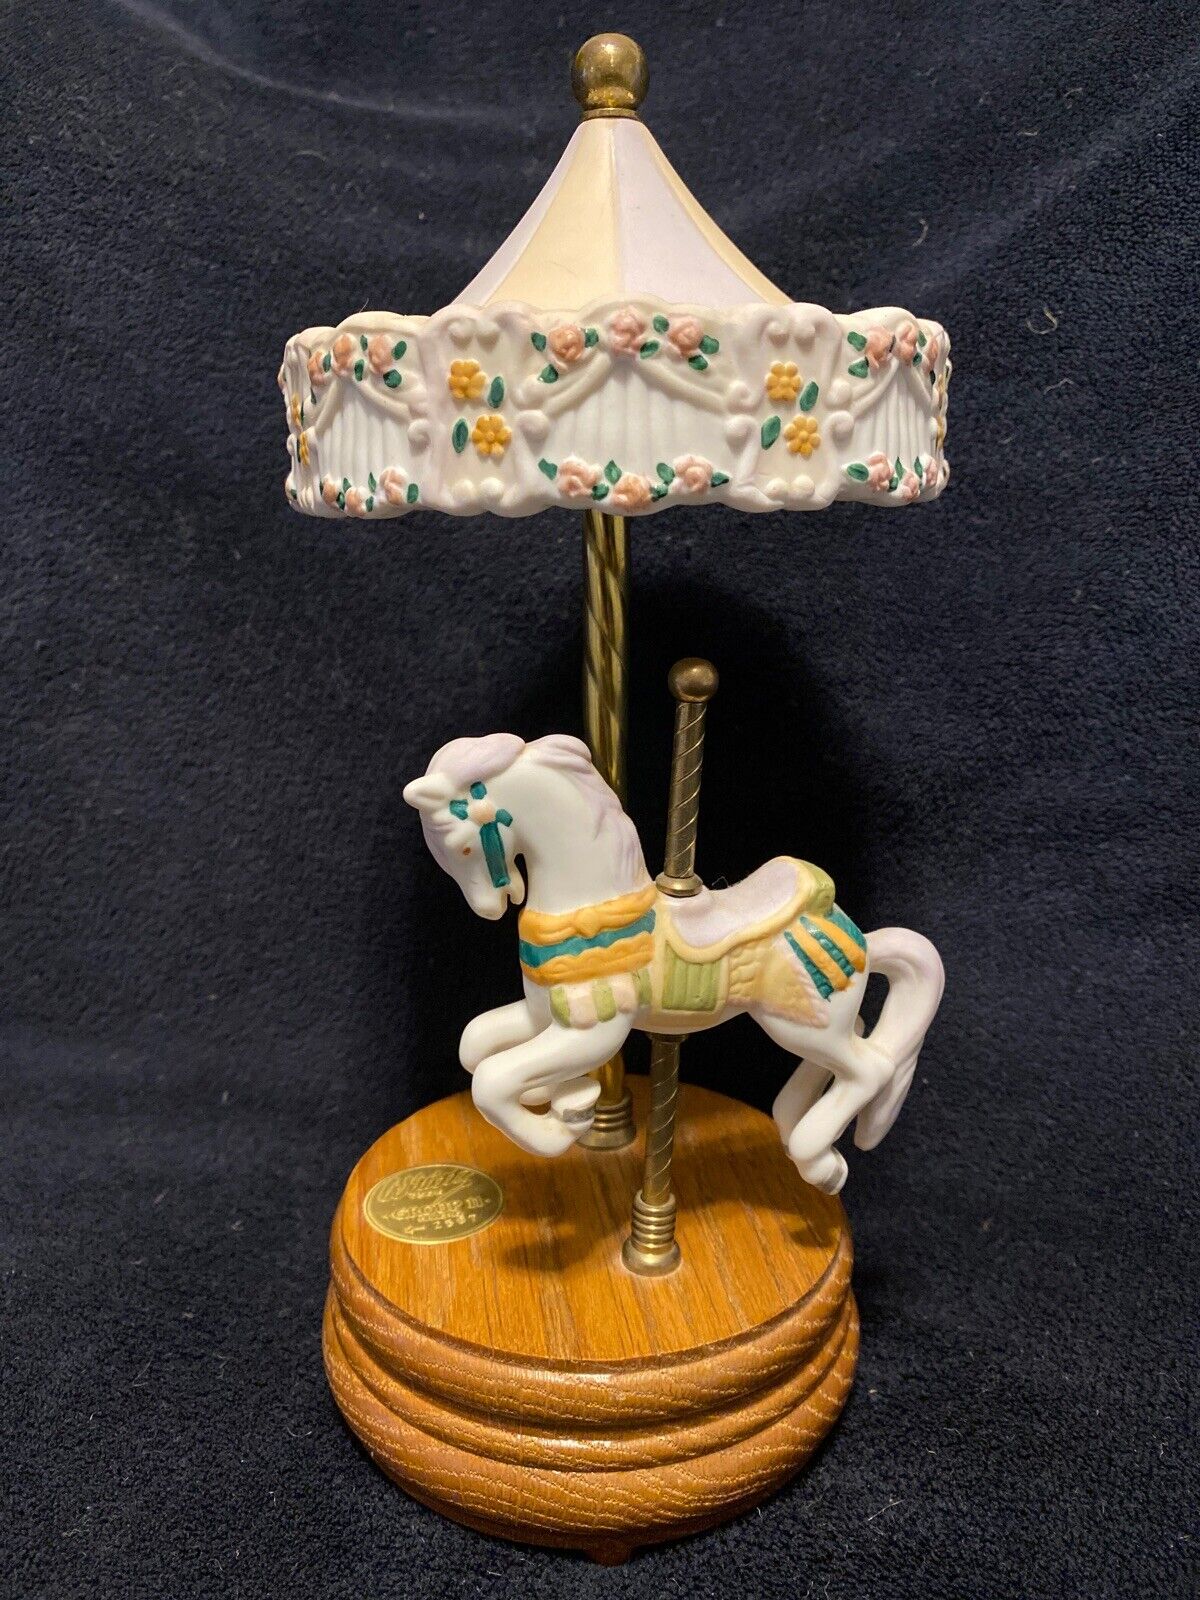 Willitts Designs Group II Porcelain Carousel Horse Music Box, Firing No. 2507